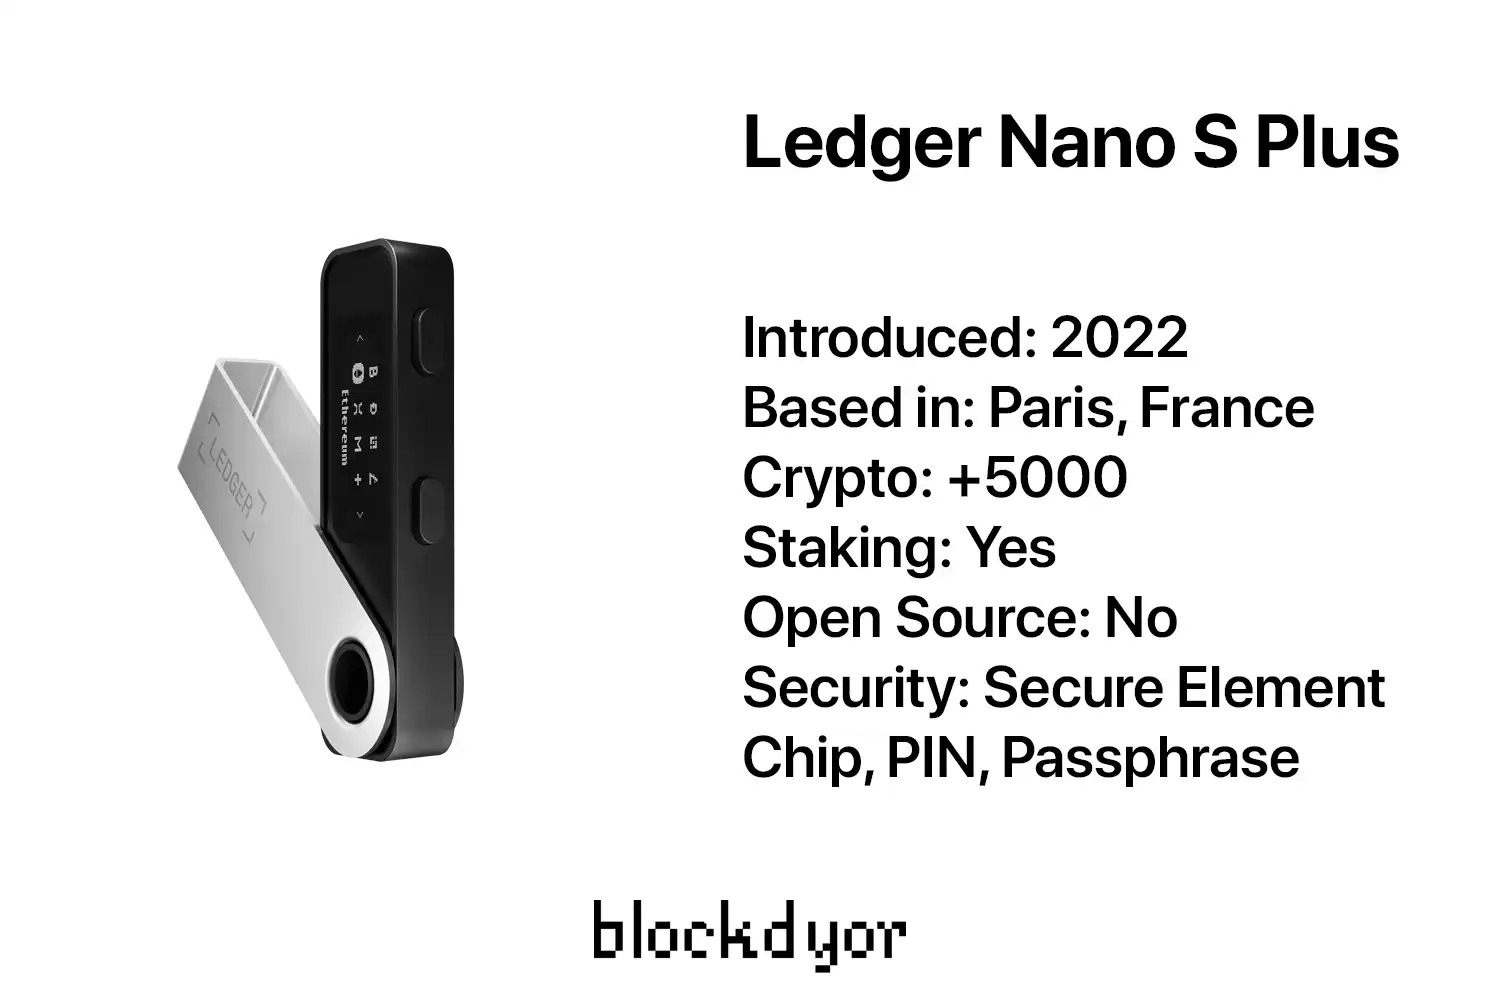 Ledger Nano S Plus Overview